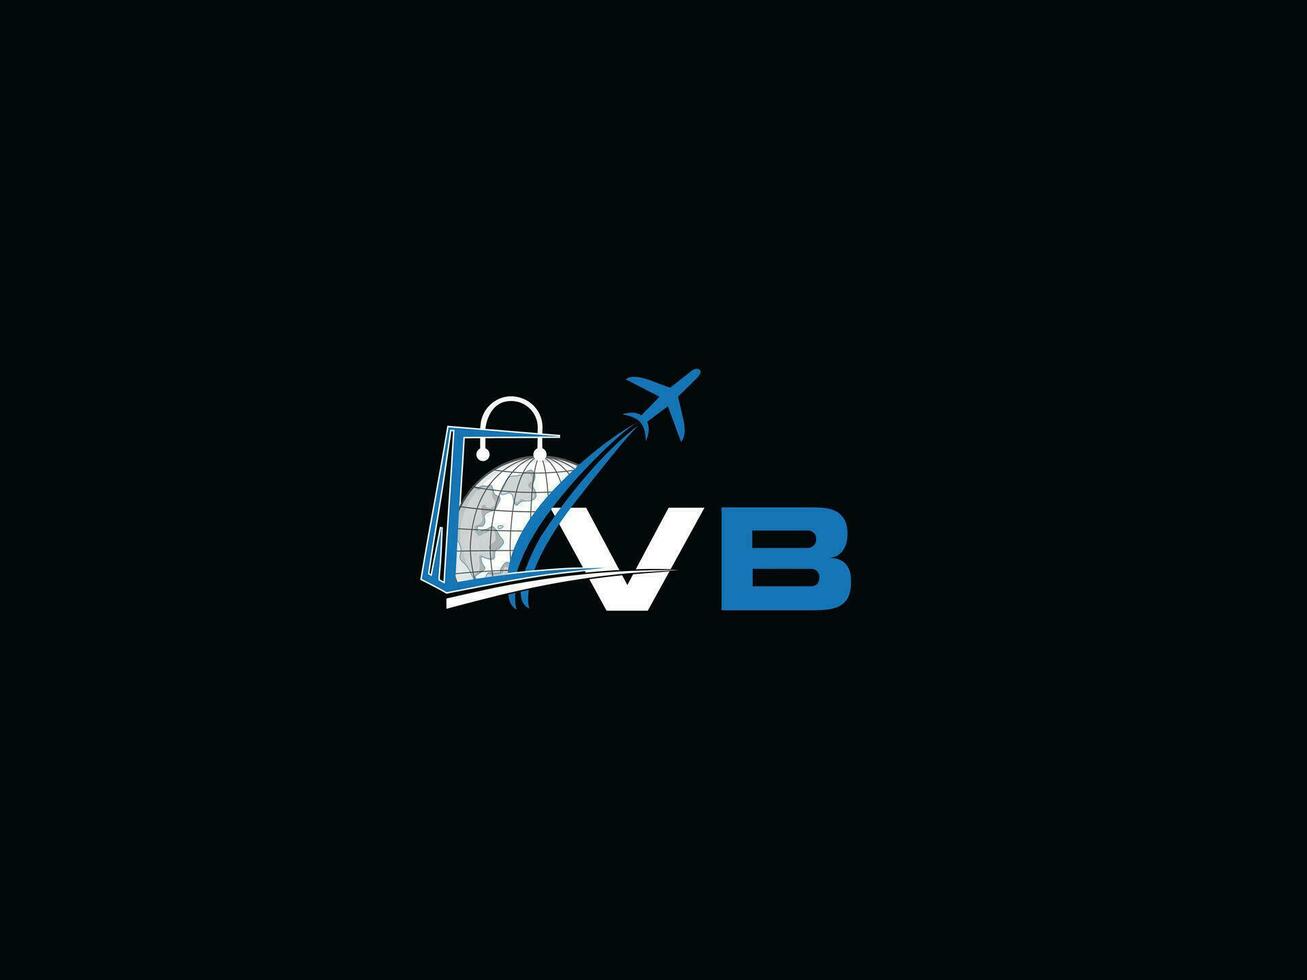 Facile air vb Voyage logo icône, initiale global vb logo pour Voyage agence vecteur